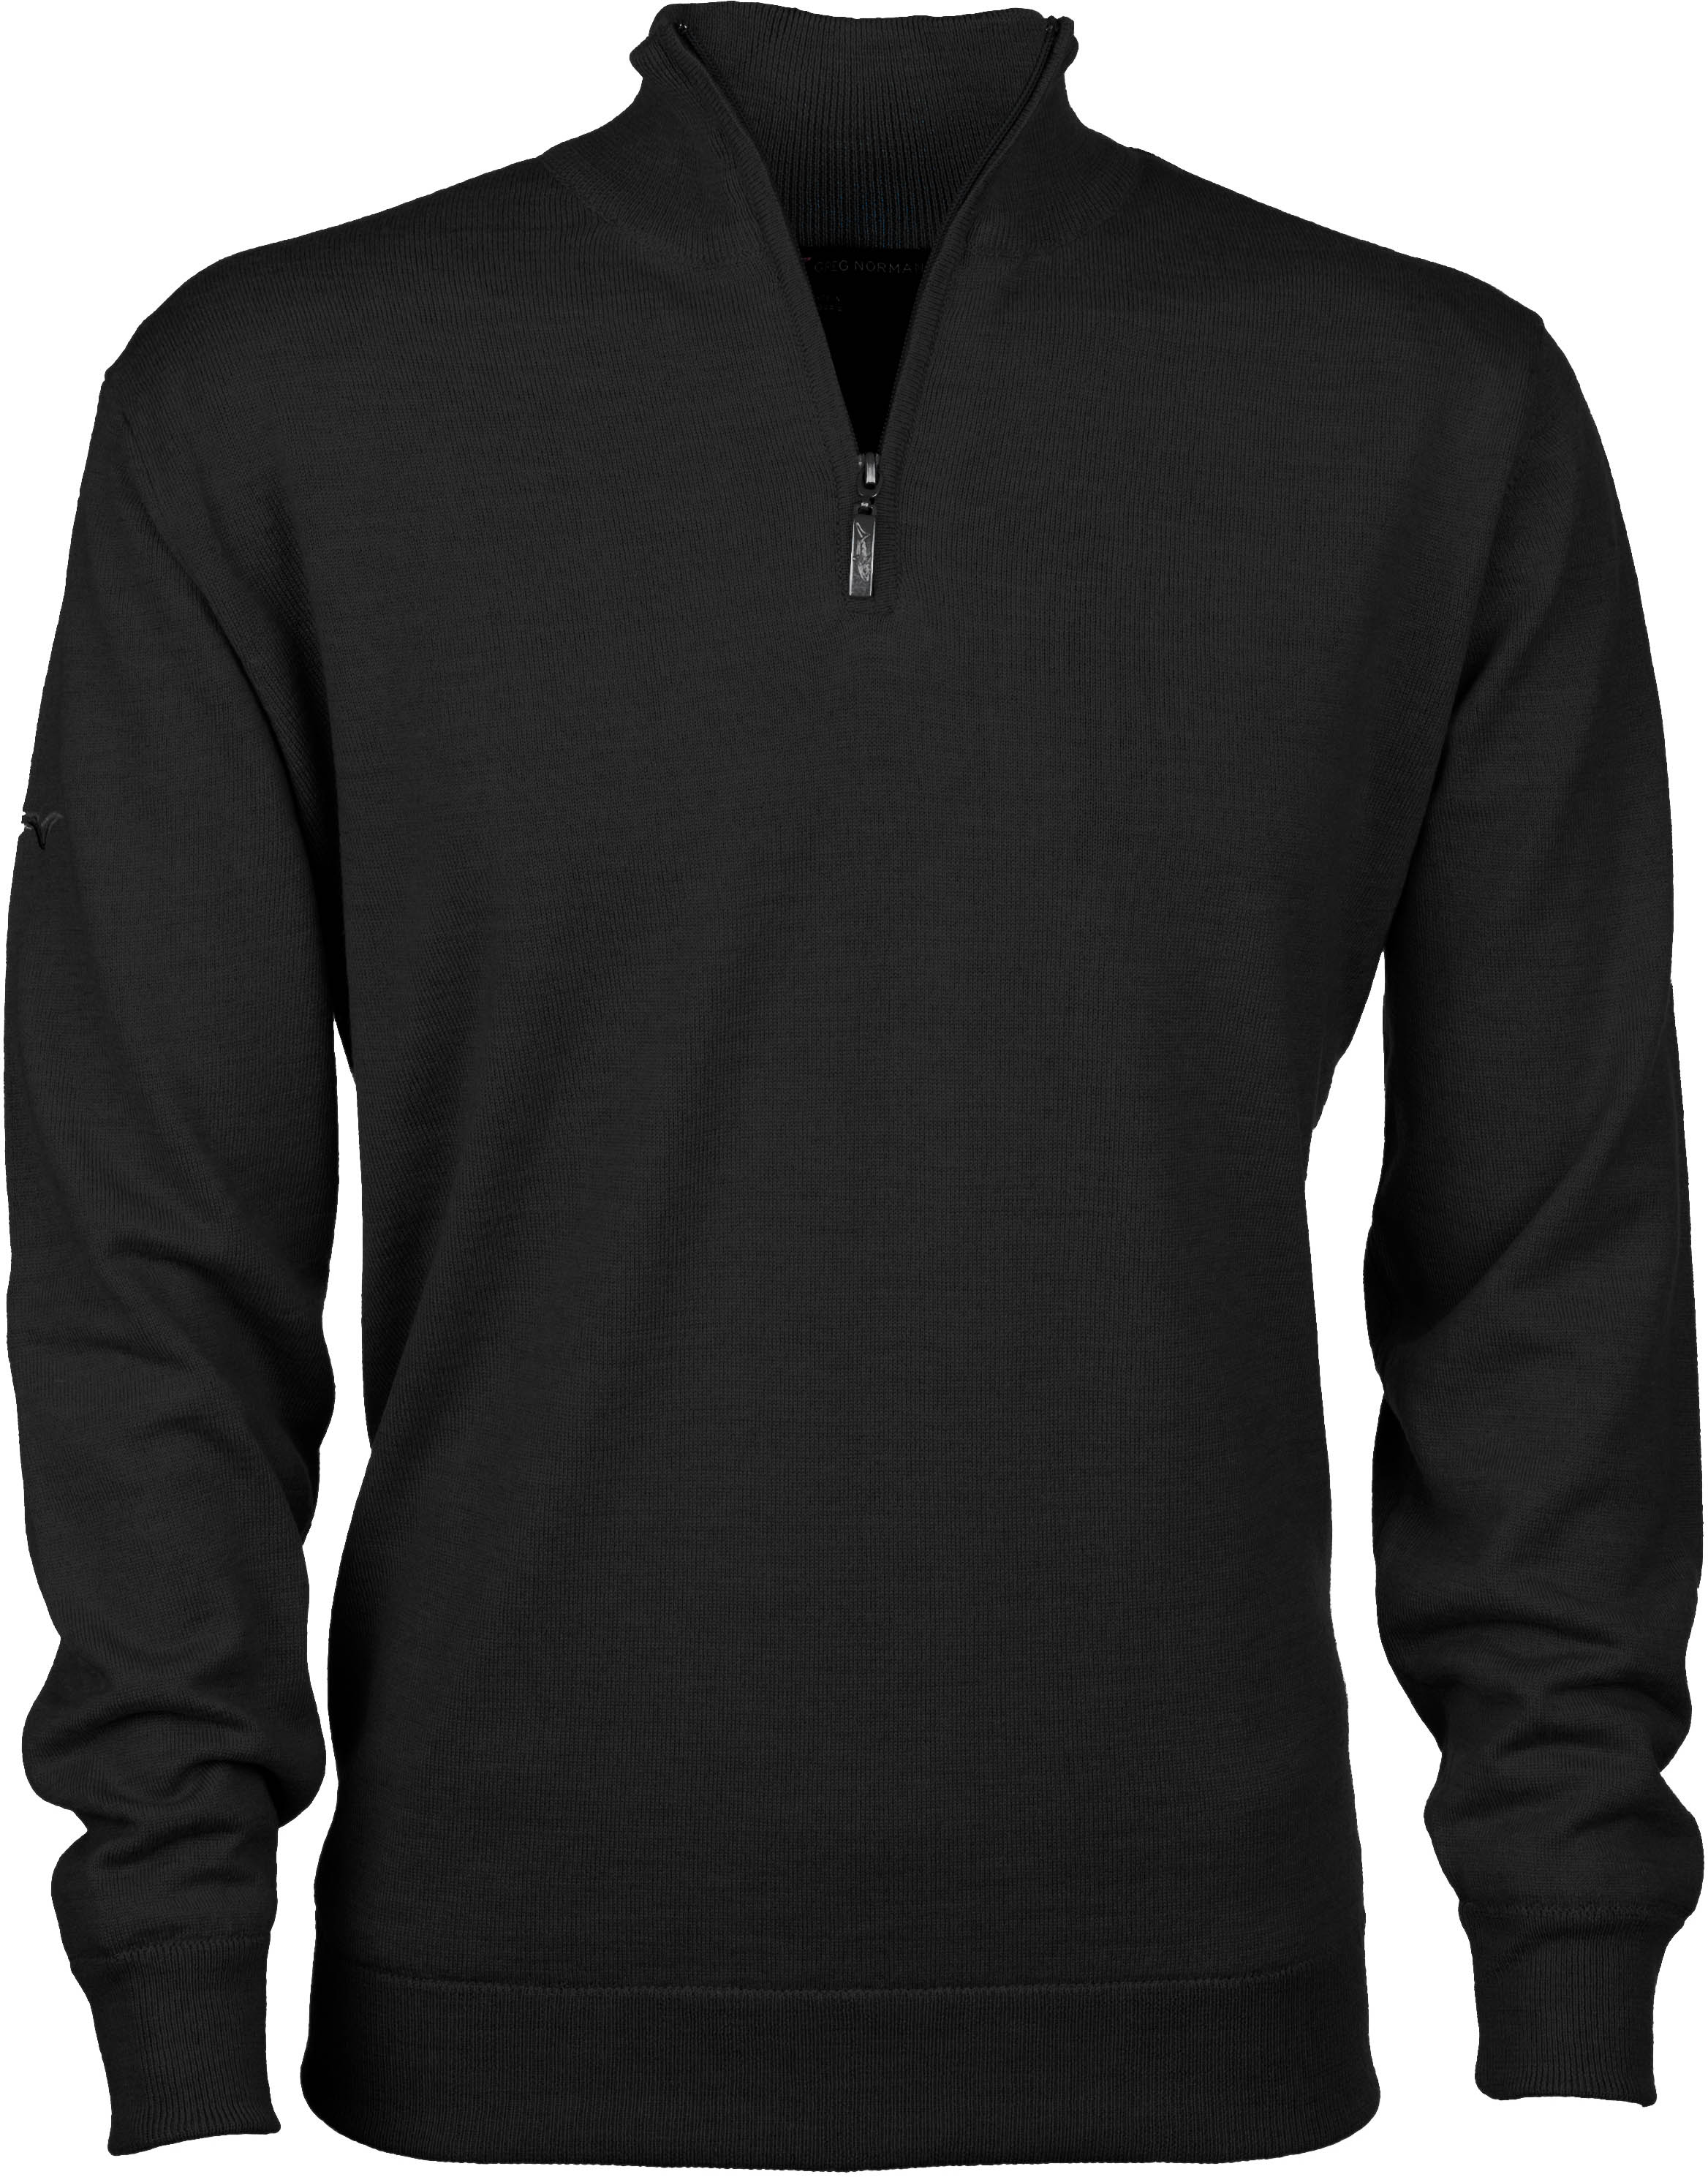 Greg Norman Windbreaker Lined 1/4 Zip Sweater, dark grey